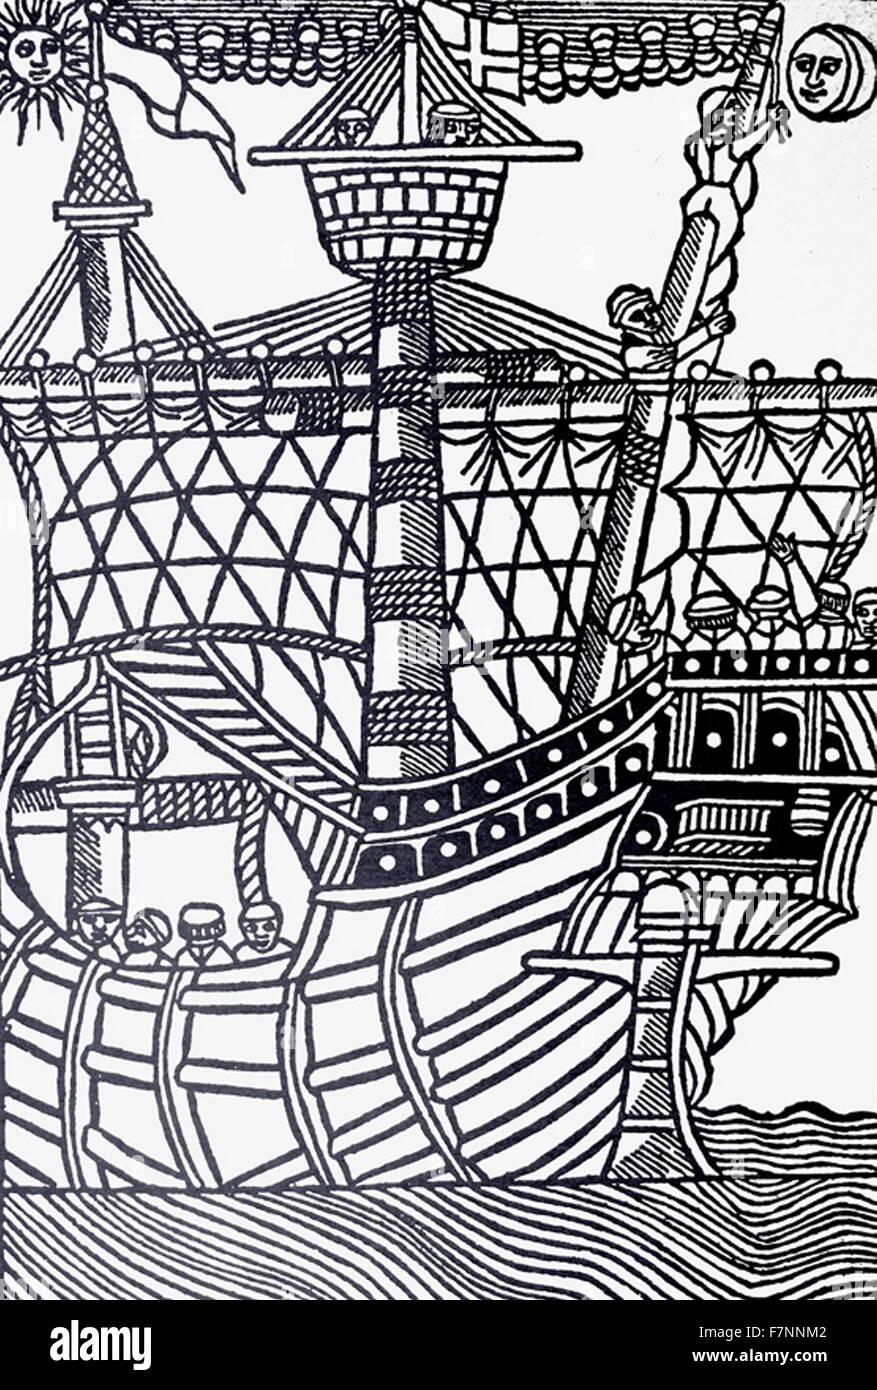 Lo spagnolo caravel (Oceano navi) 1439. illustrazione da Libre de Cosolat tractat dels fet maritims, Barcelona, 1439. Foto Stock